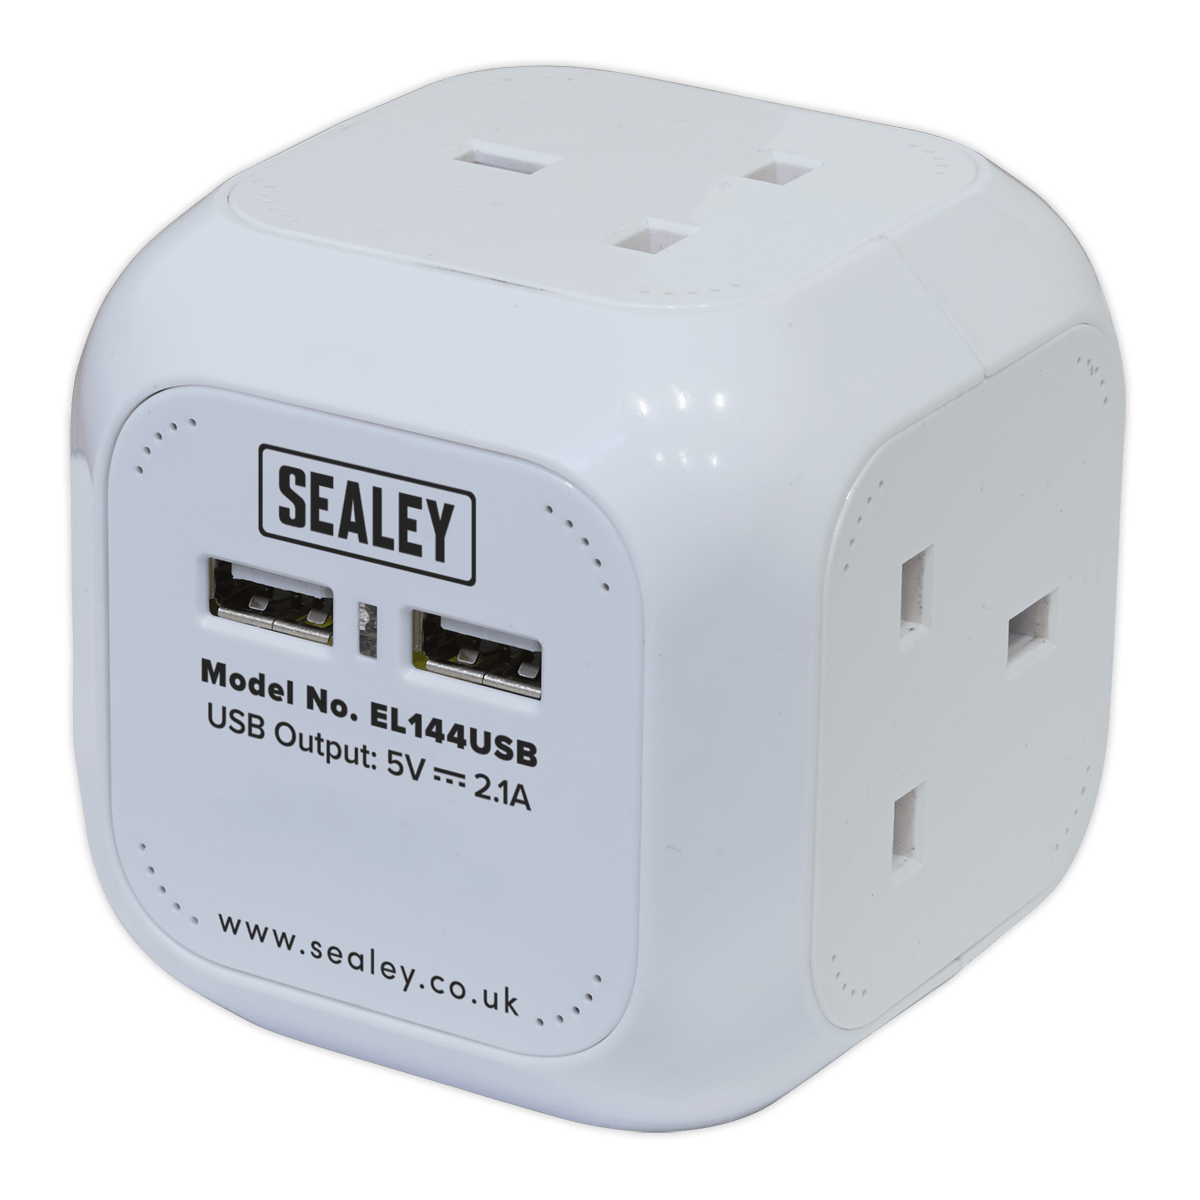 Sealey Extension Cable Cube 1.4m 4 x 230V & 2 x USB Sockets - White EL144USB